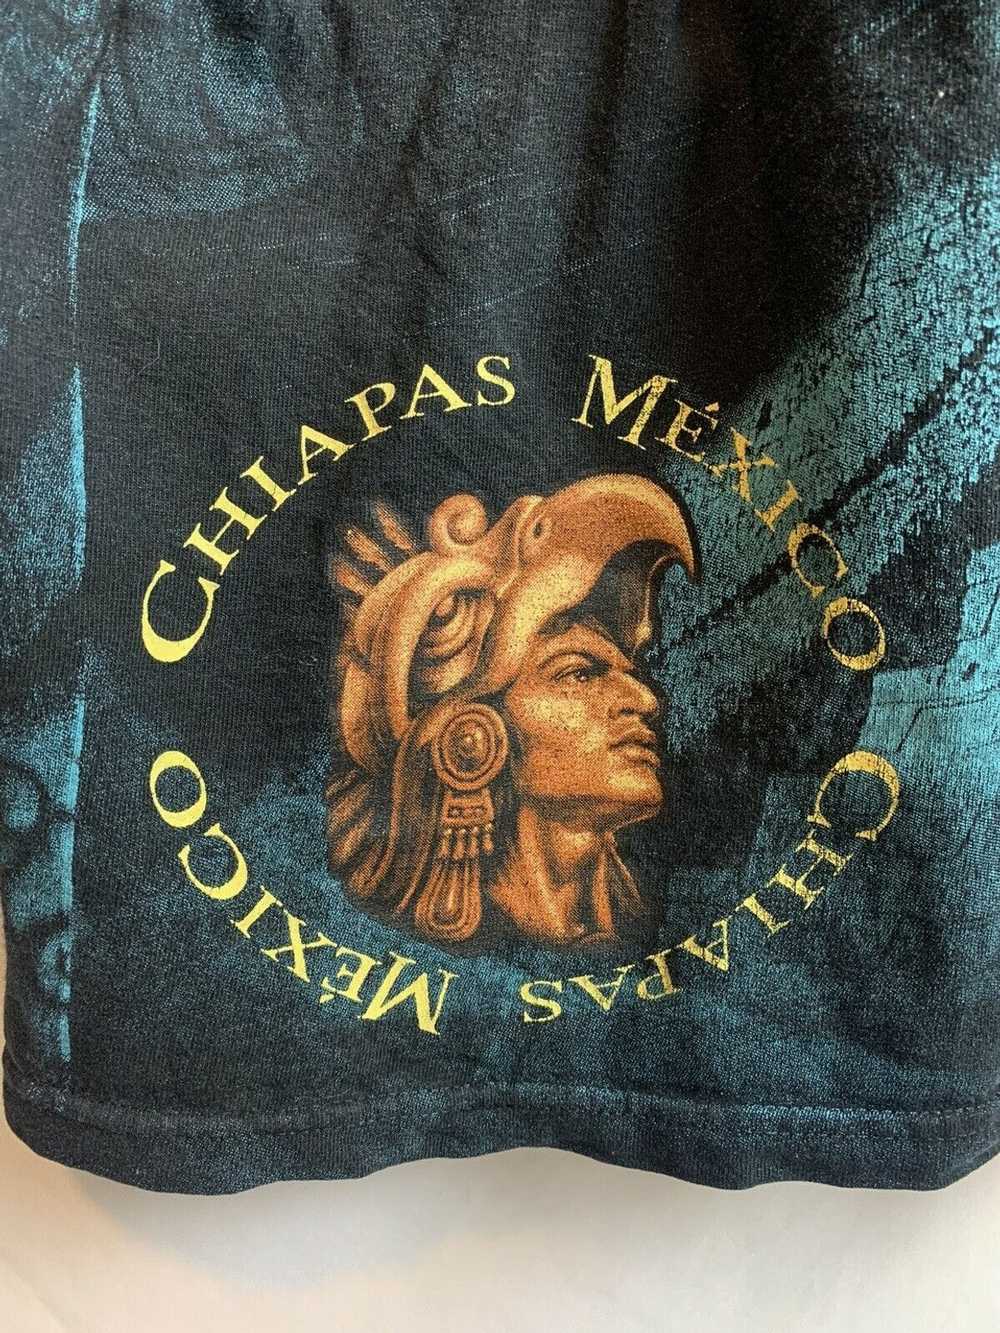 Other Chiapas All Over Print Vintage YAZBEK TShir… - image 2